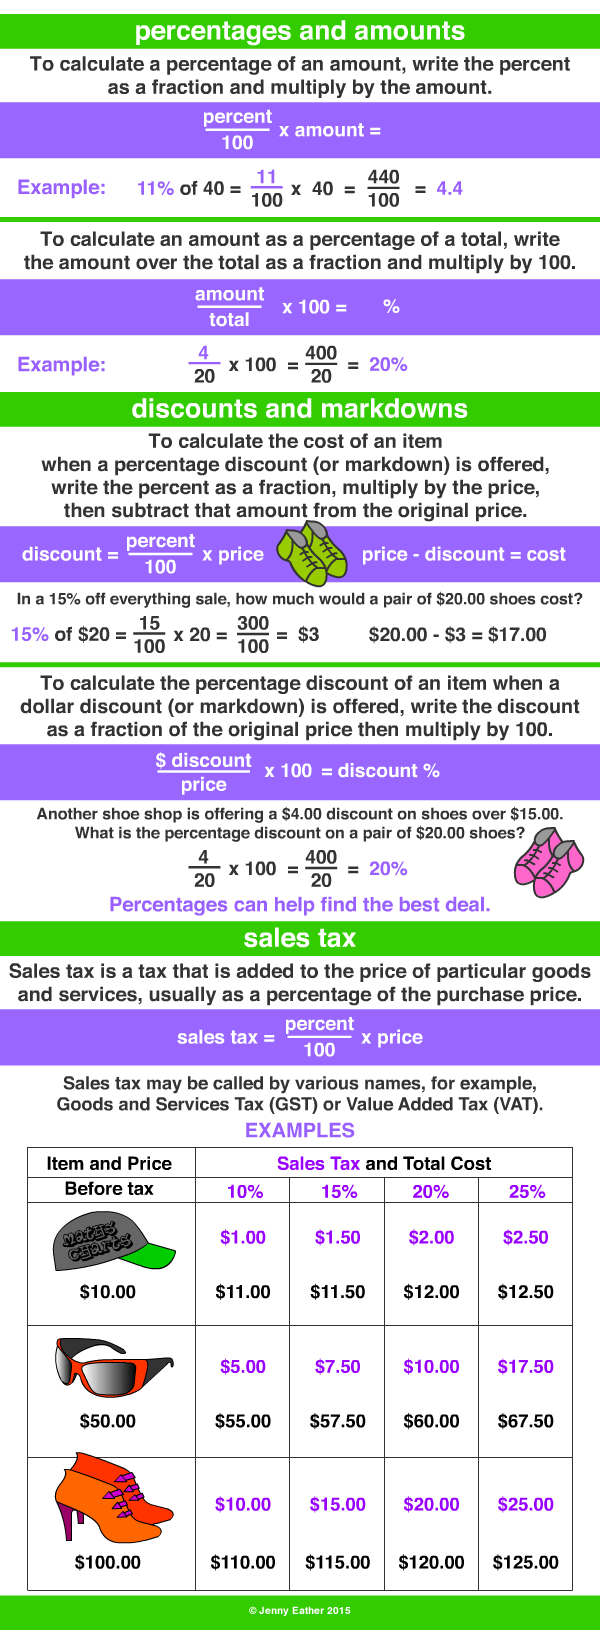 amounts discounts markdowns sales tax